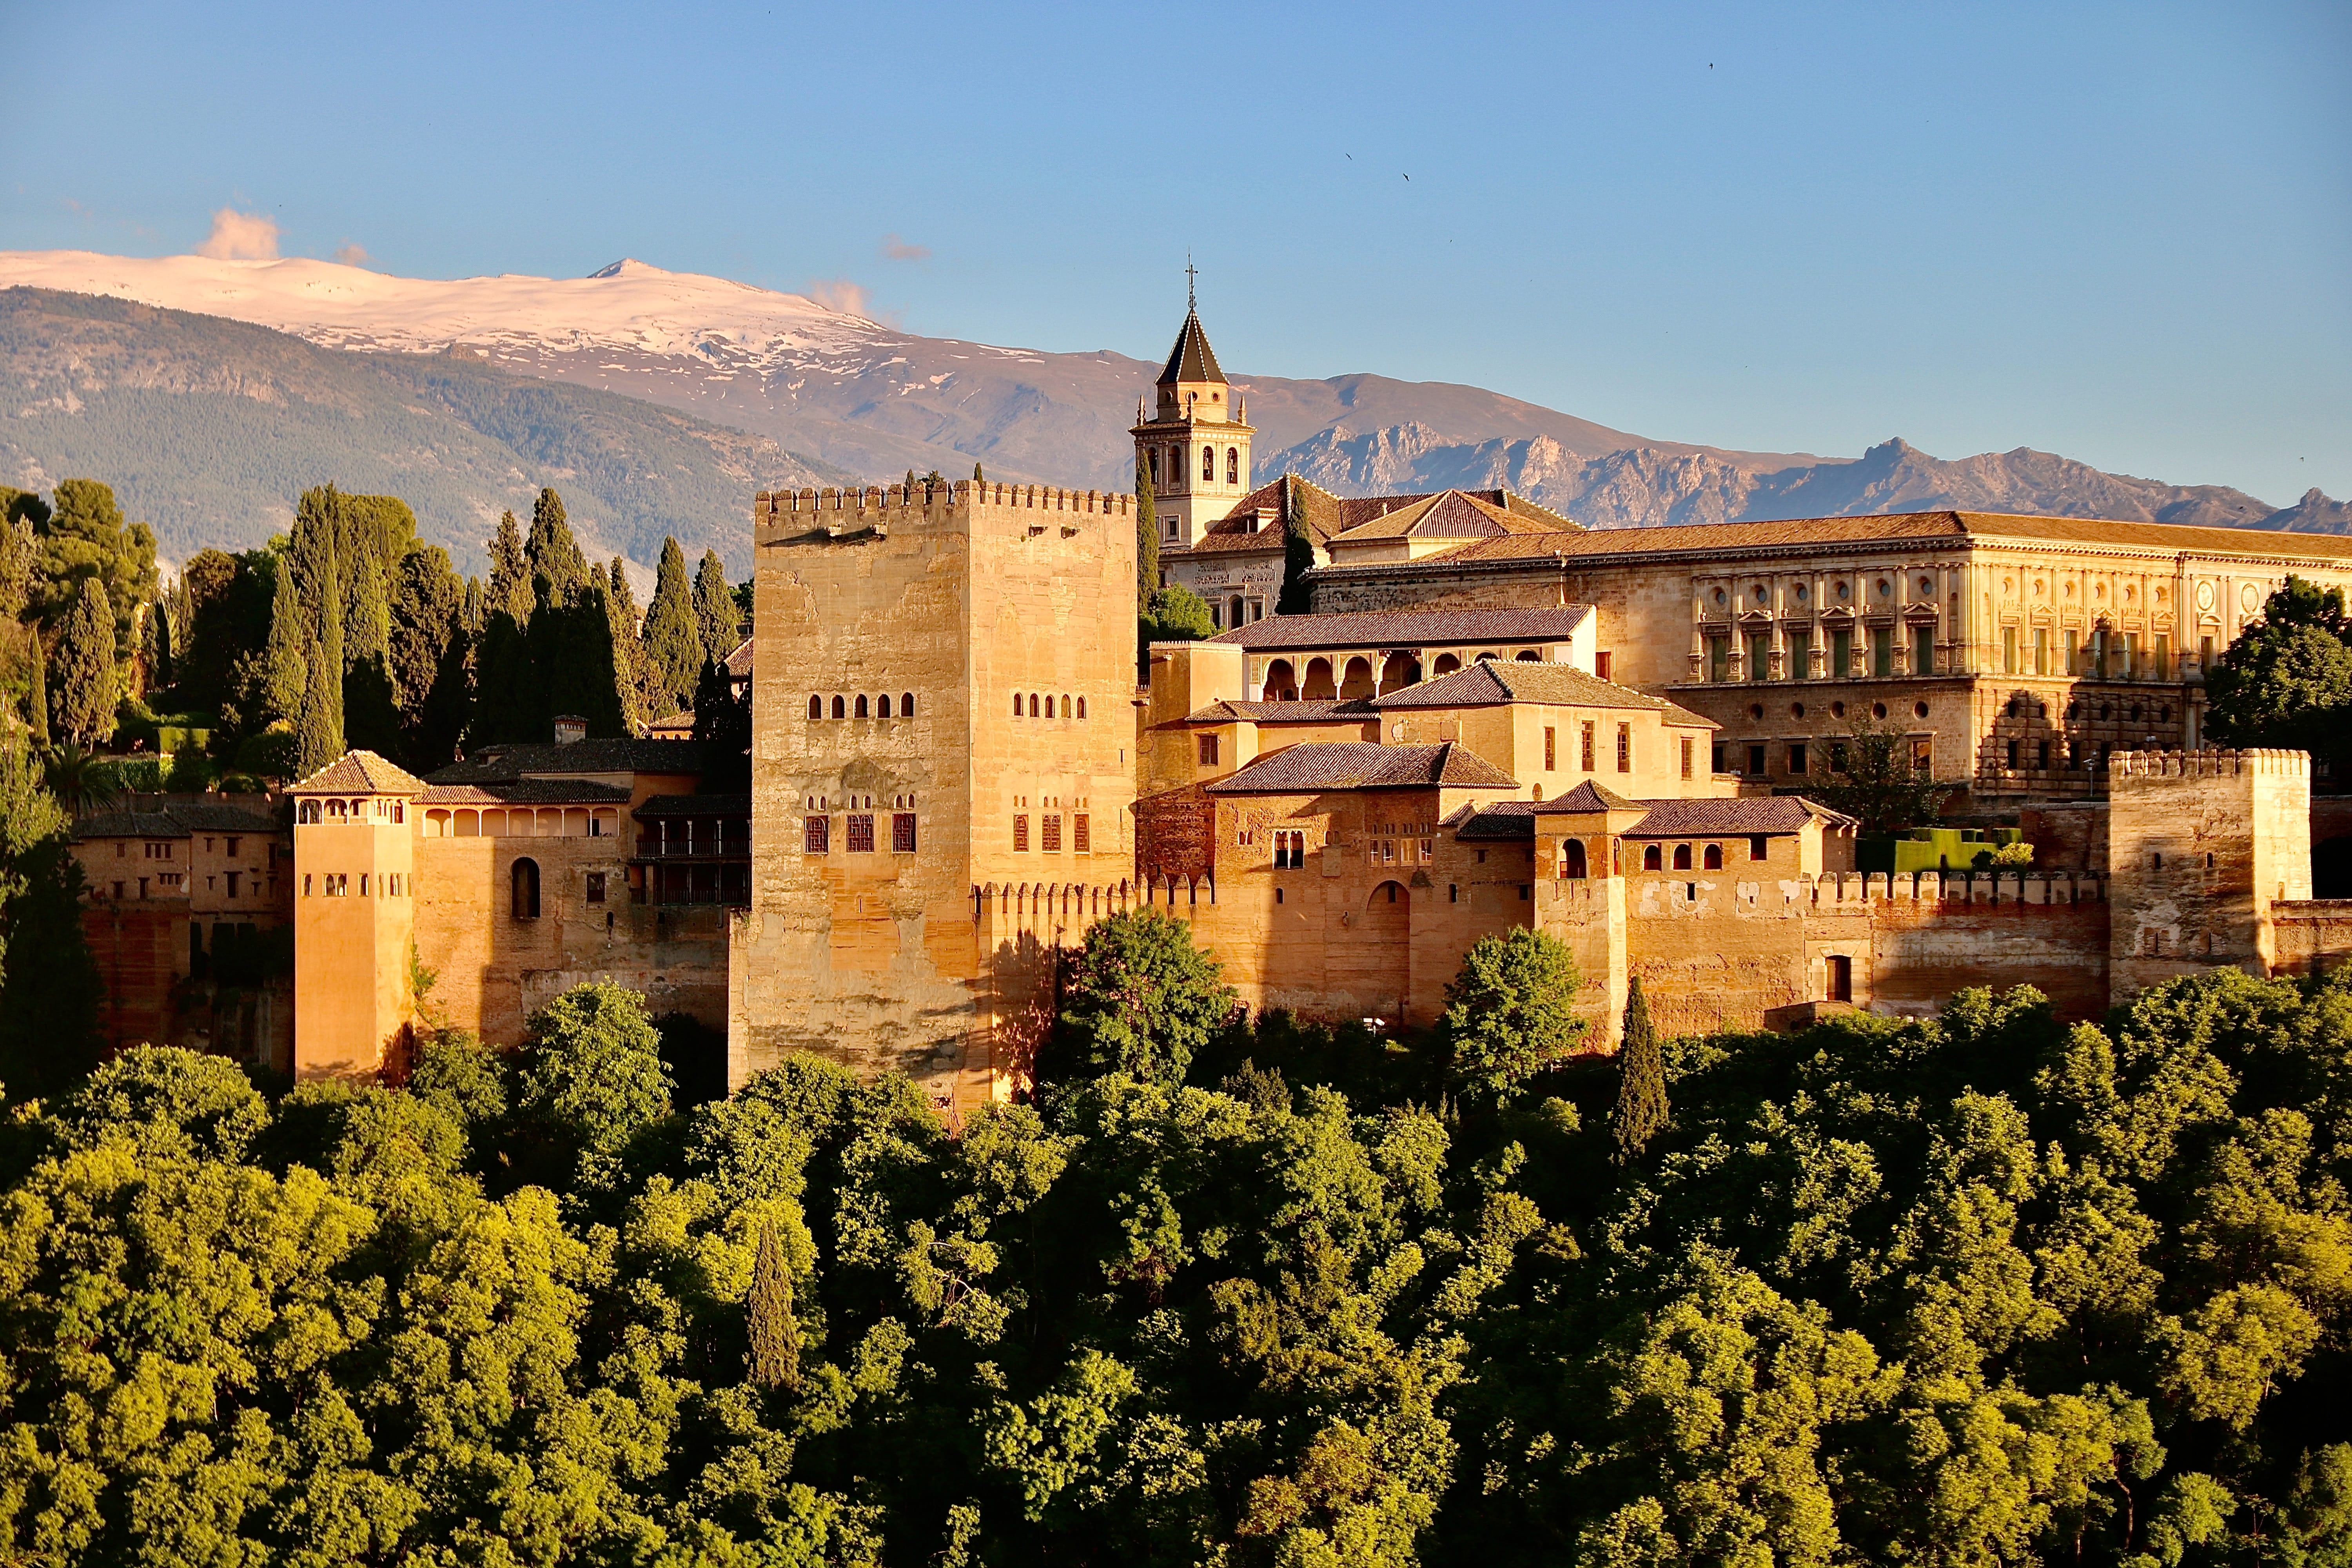 The Alhambra over Granada, Spain